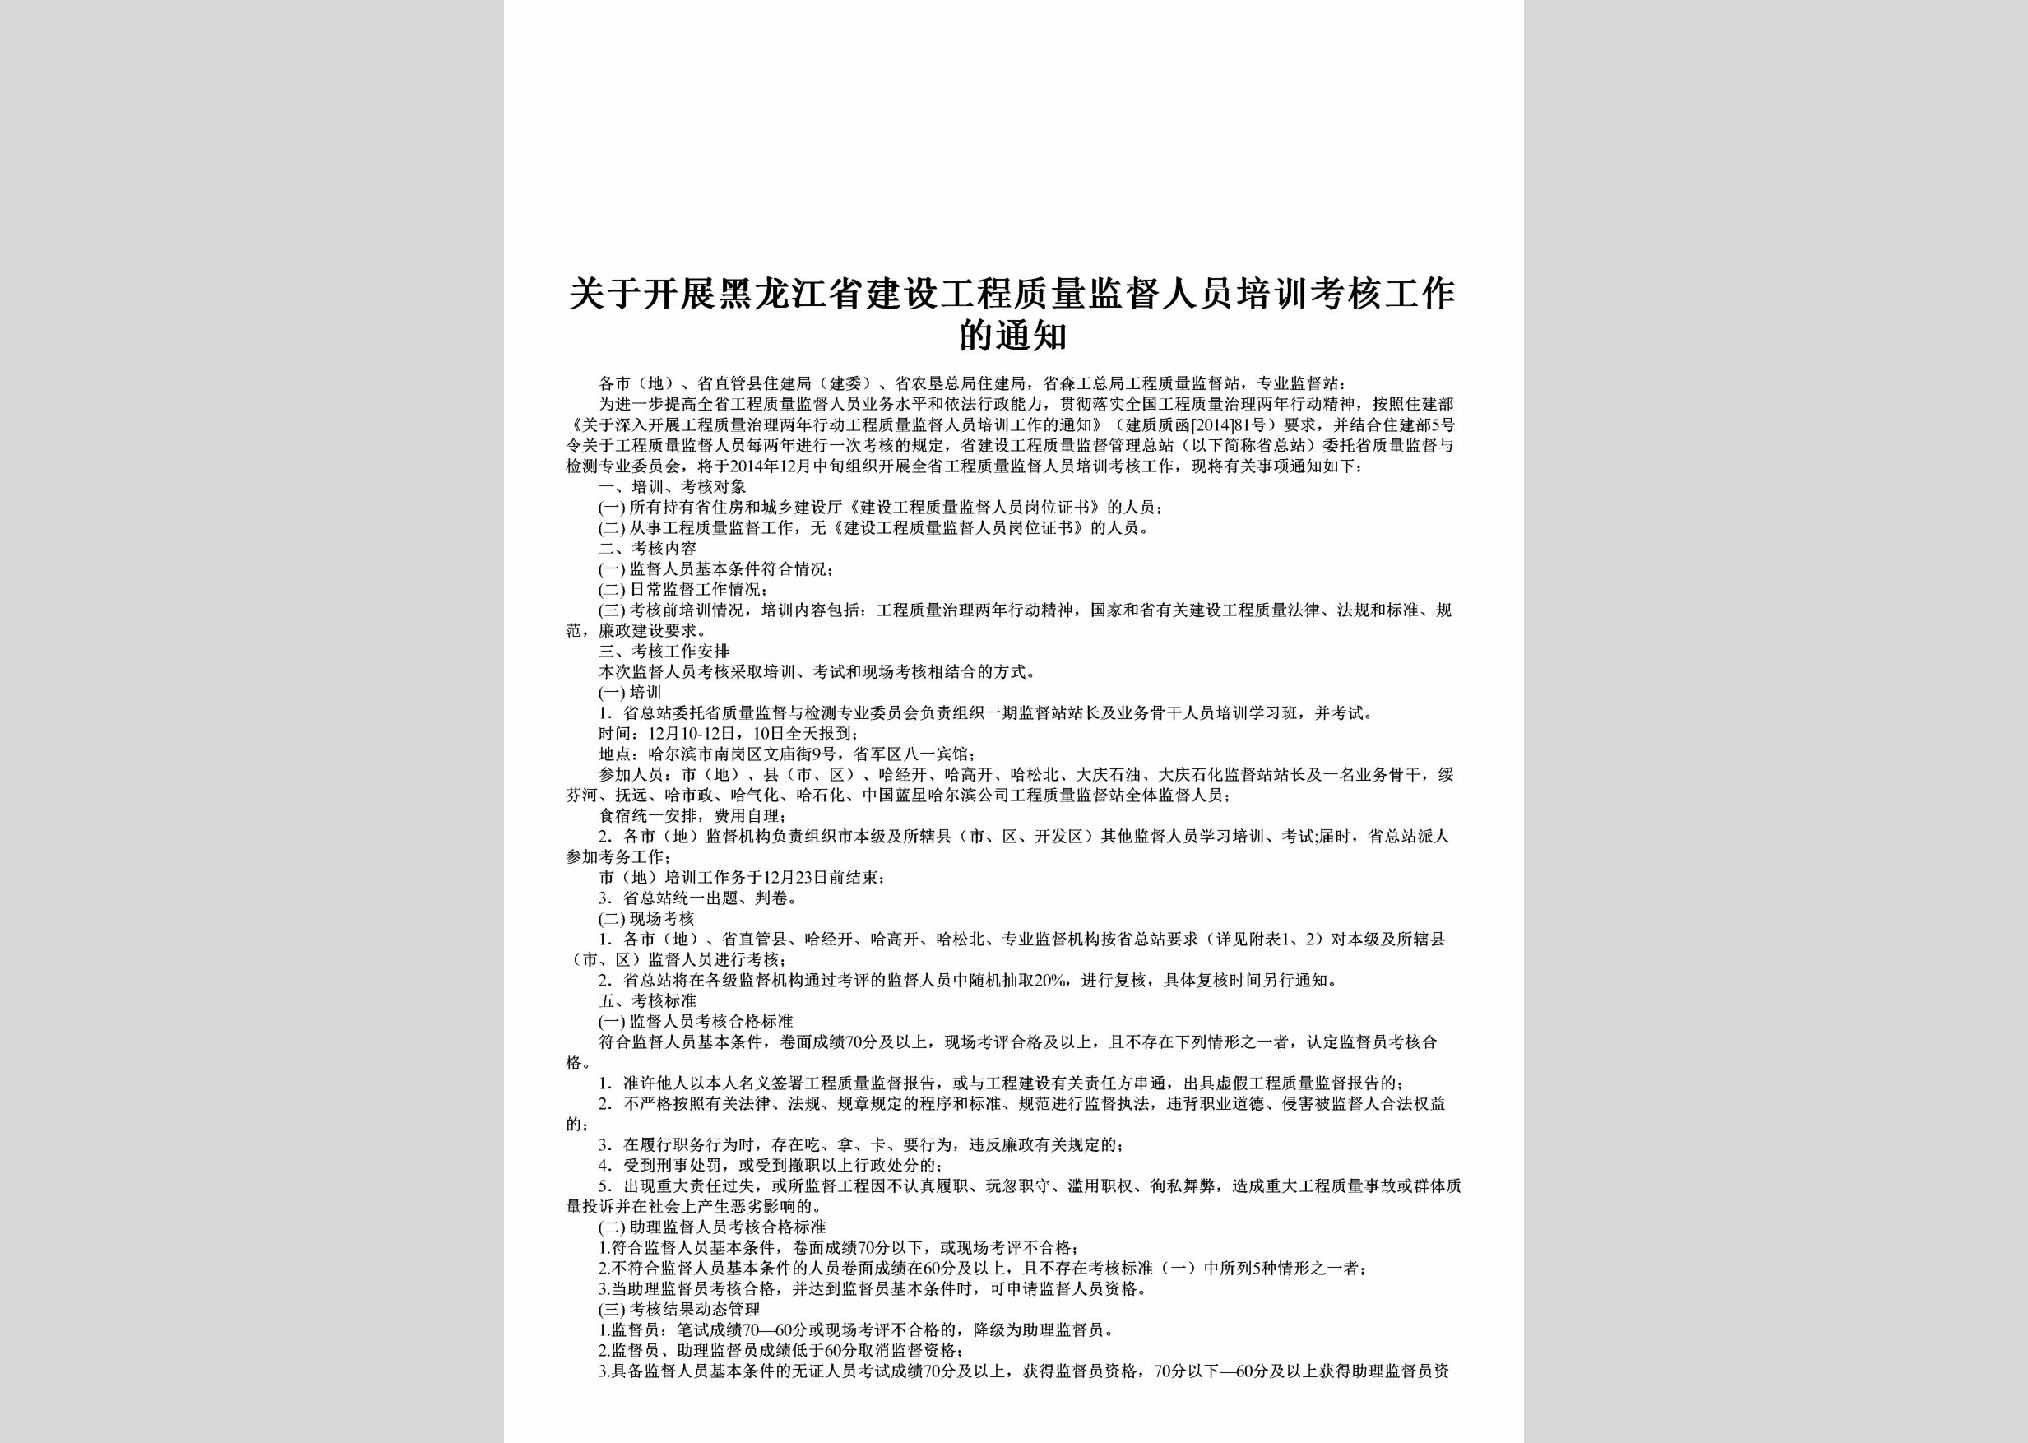 HLJ-GCZLKHTZ-2014：关于开展黑龙江省建设工程质量监督人员培训考核工作的通知